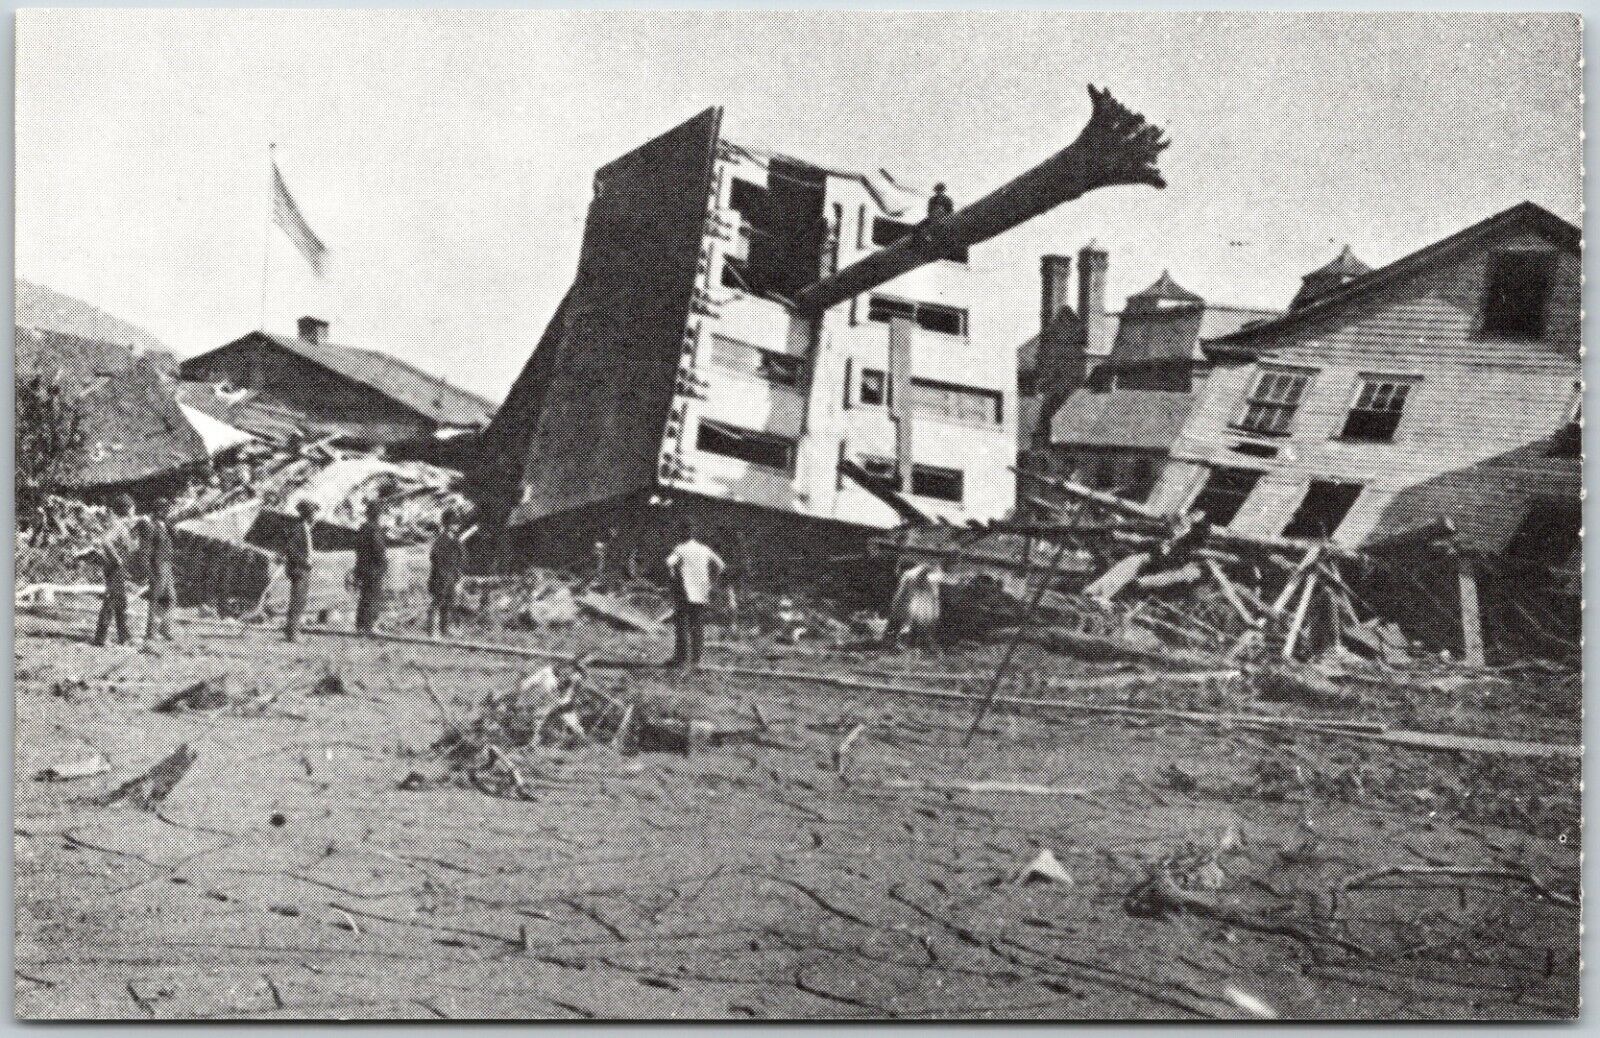 Shultz Home, Main & Union Streets, Johnstown, Pennsylvania Flood 1889 - Postcard